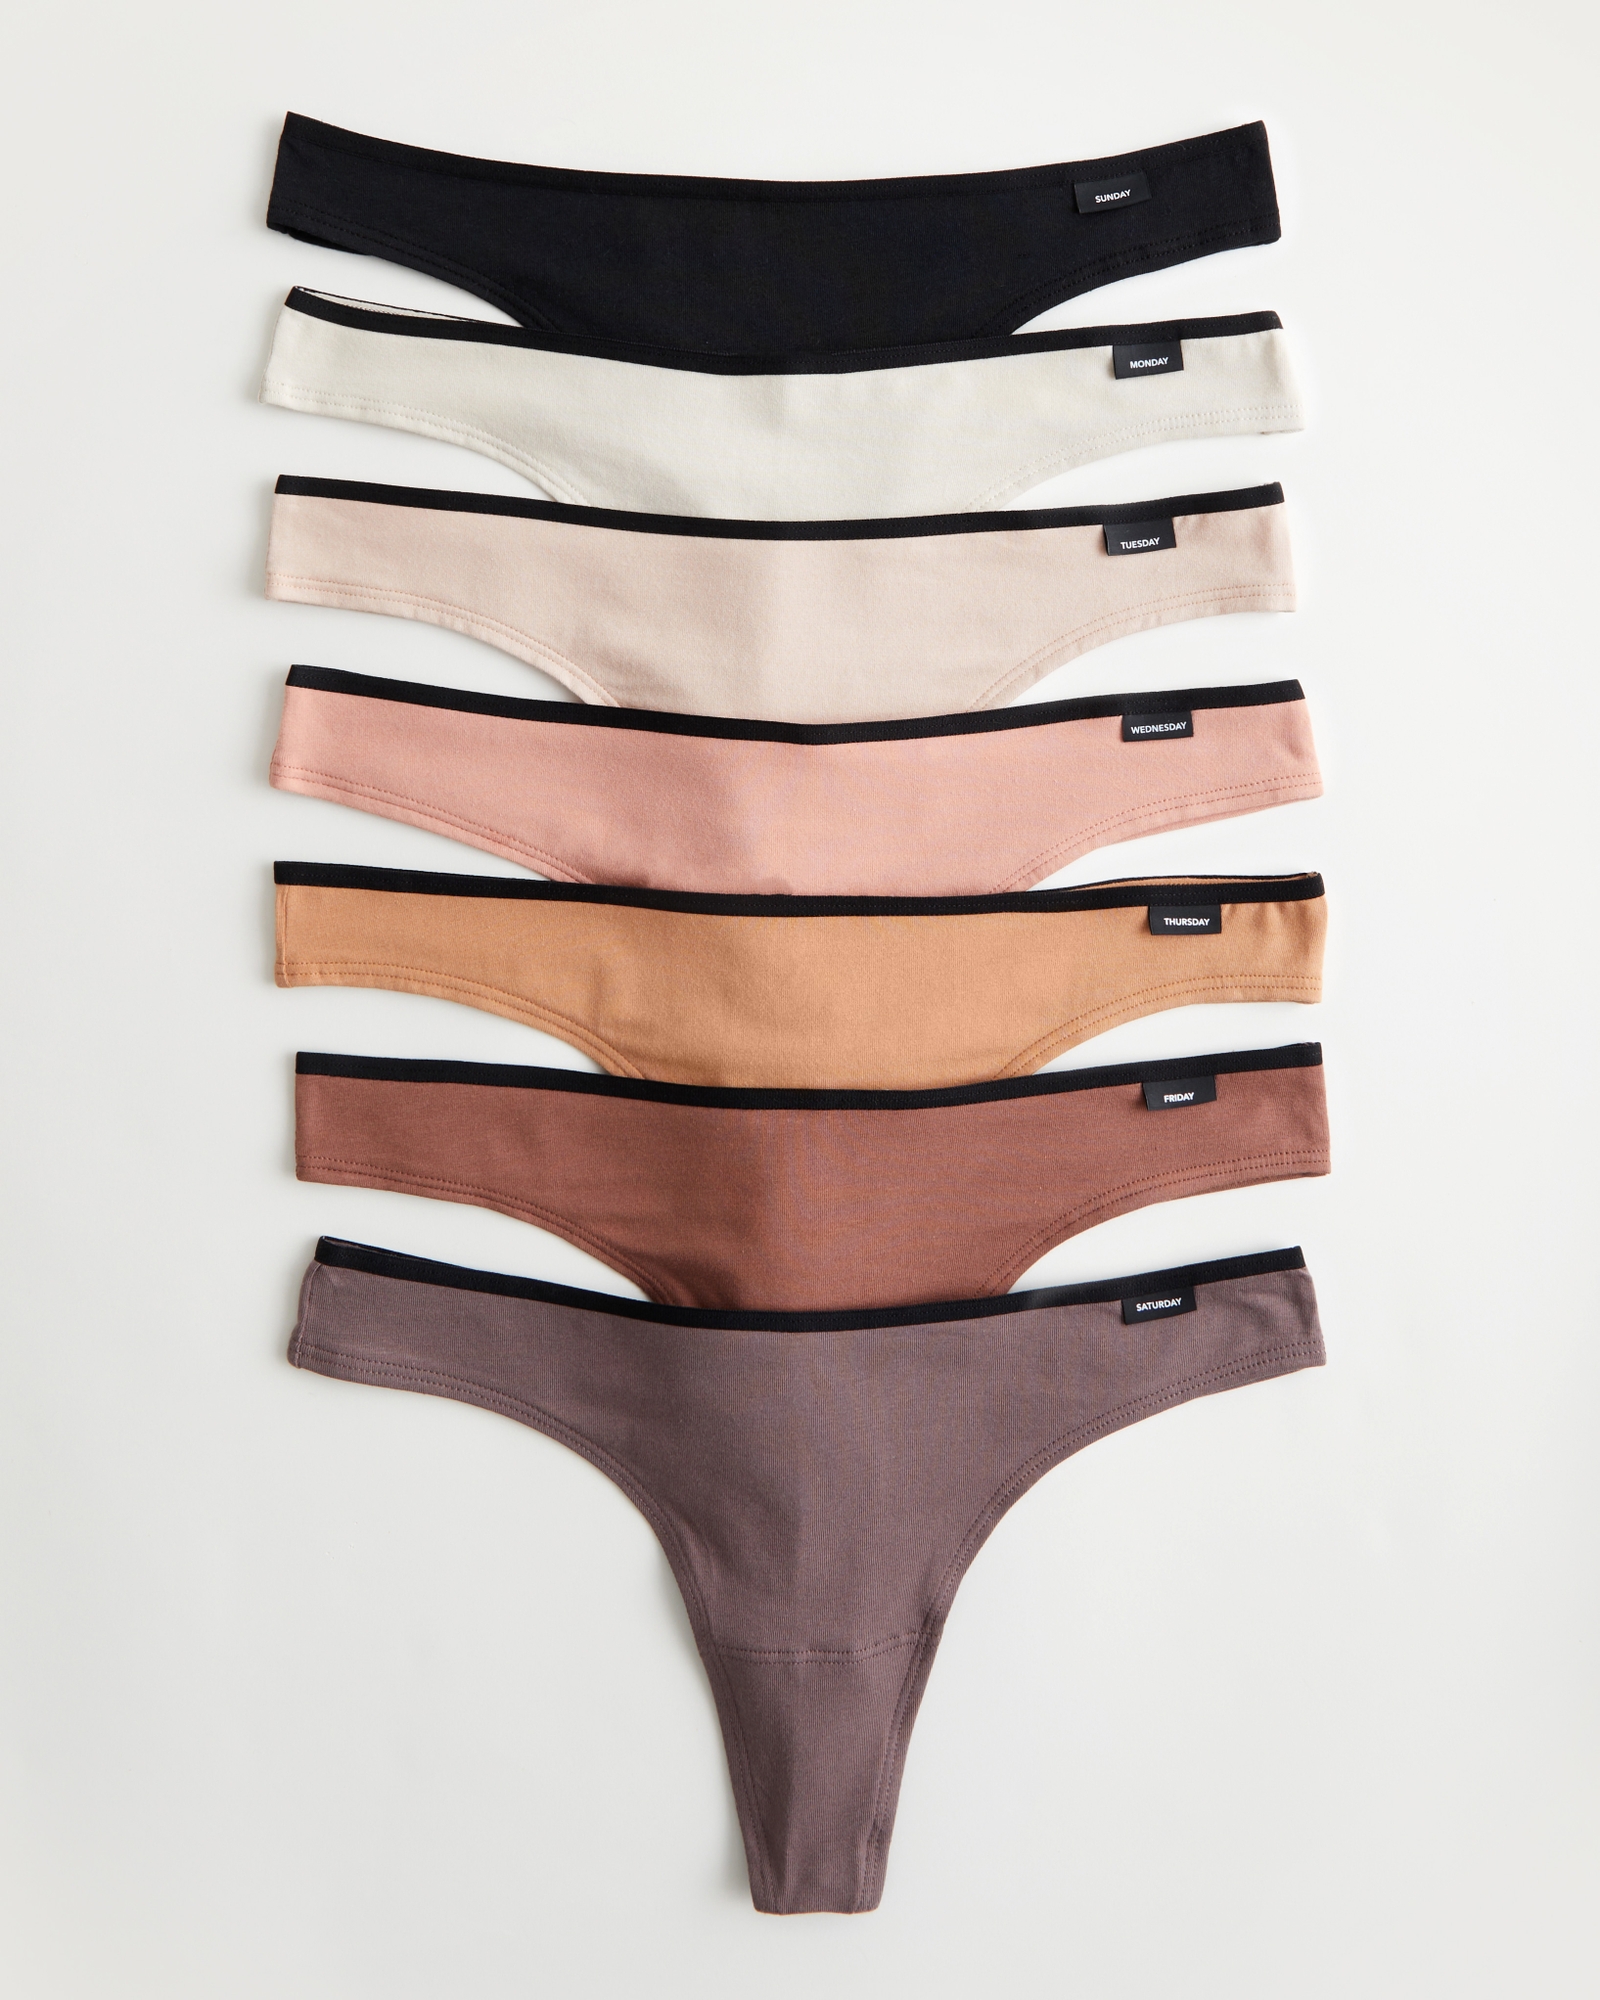 HOLLISTER GILLY HICKS Lace Bikini Underwear 5 Pack $50.00 - PicClick